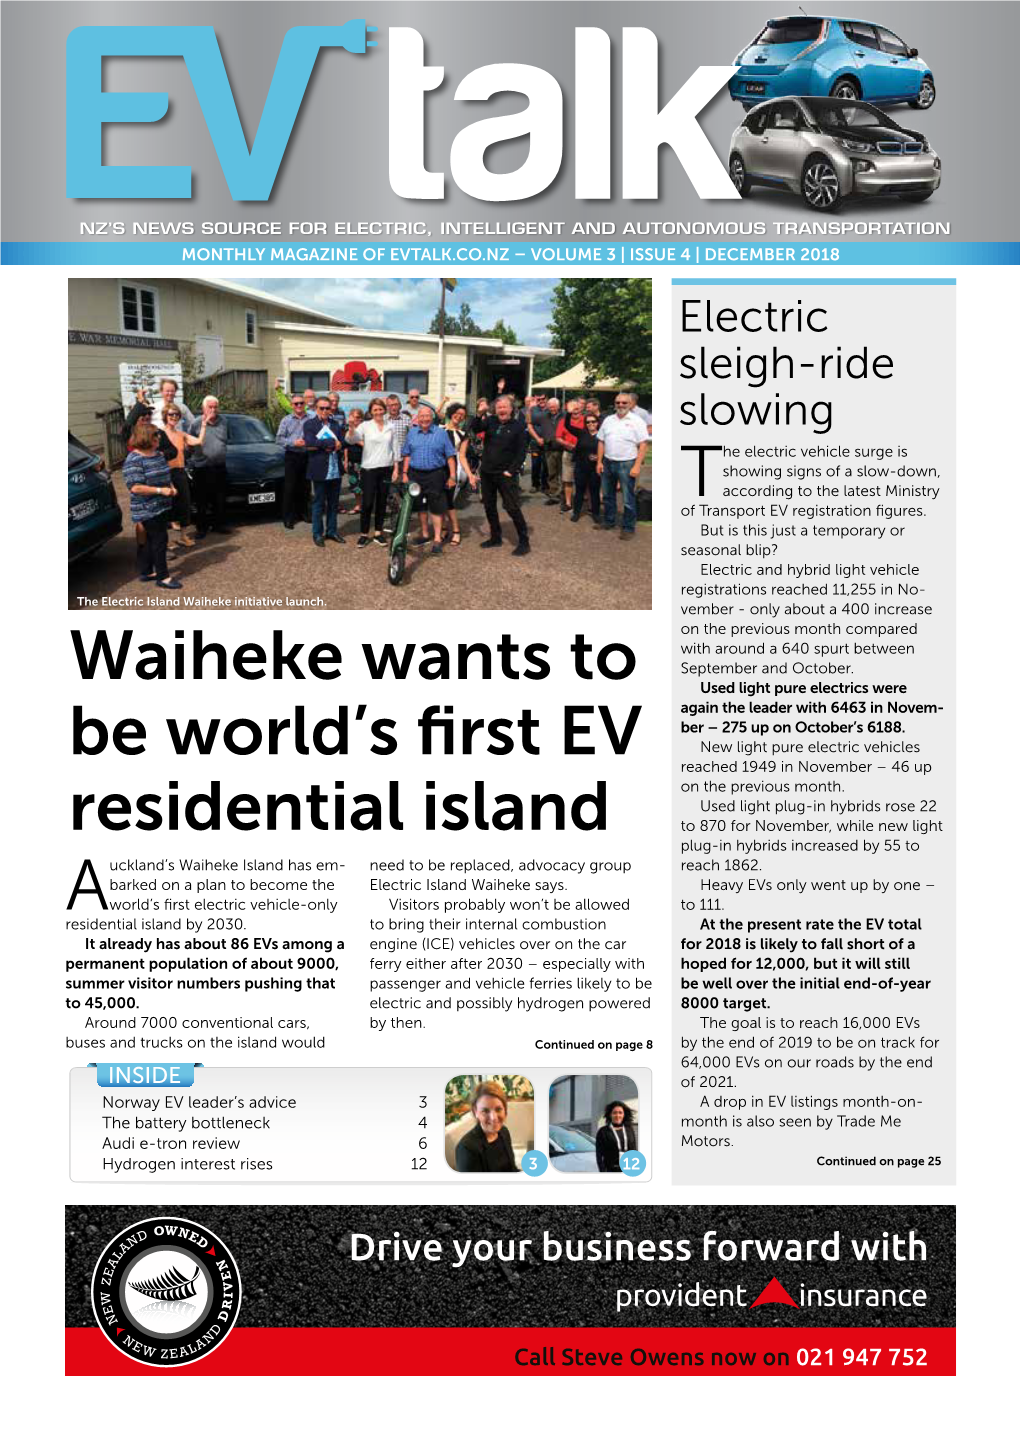 Waiheke Wants to Be World's First EV Residential Island